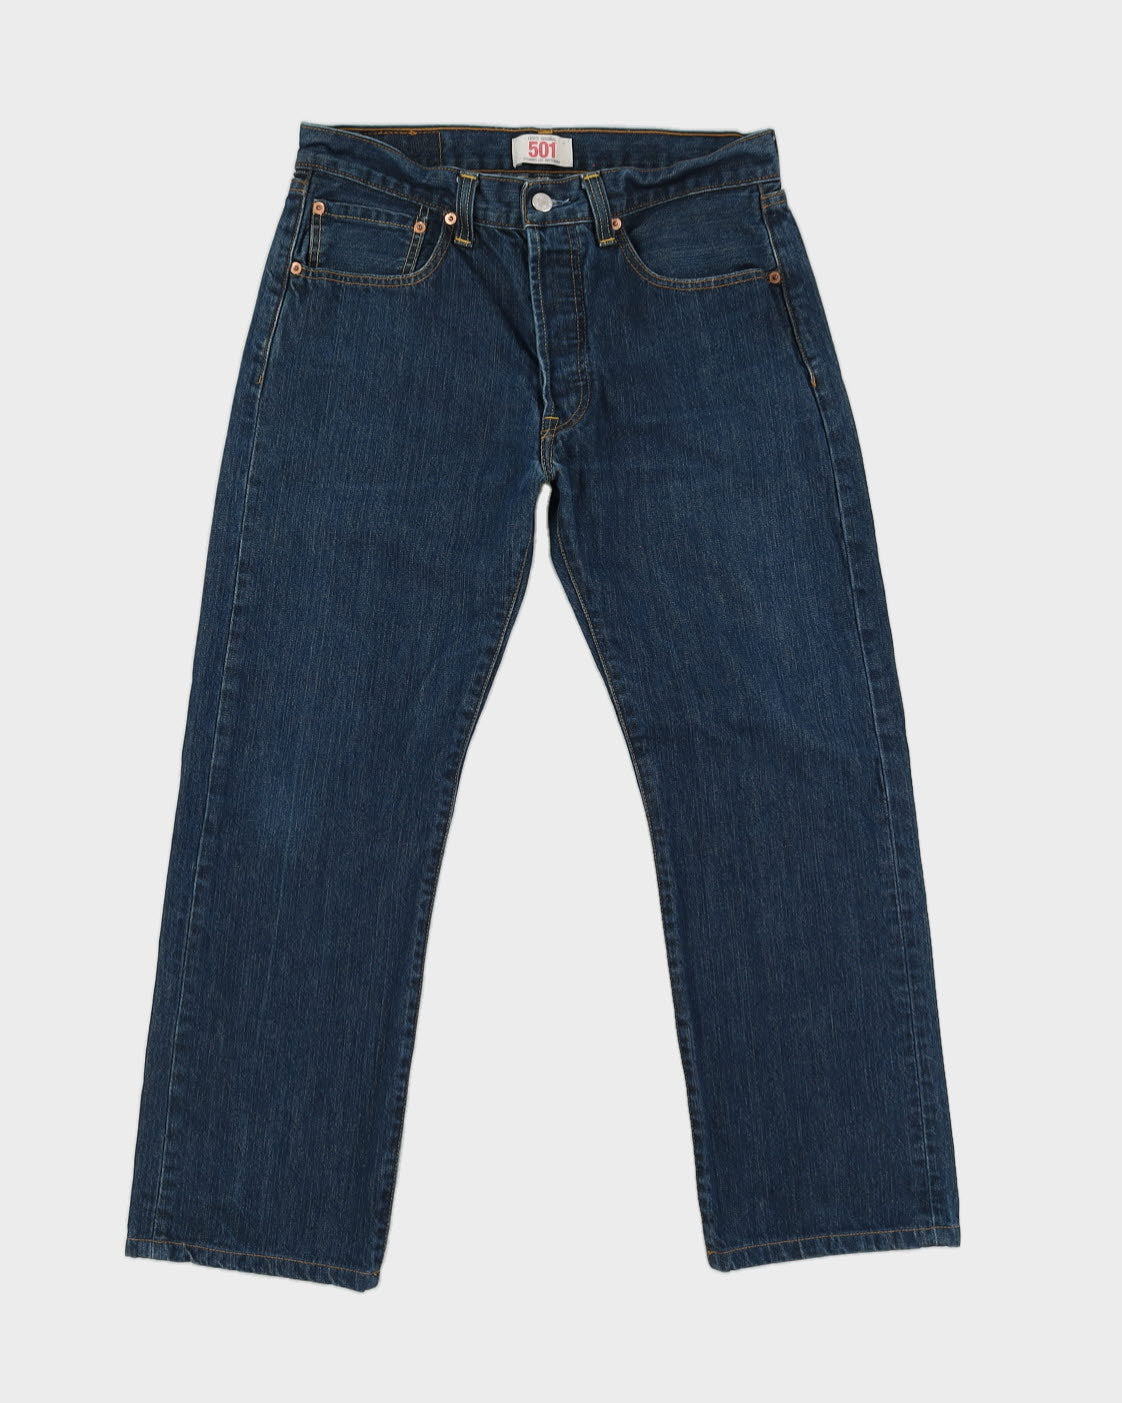 00s Levi's 501 Medium Washed Jeans - W32 L28